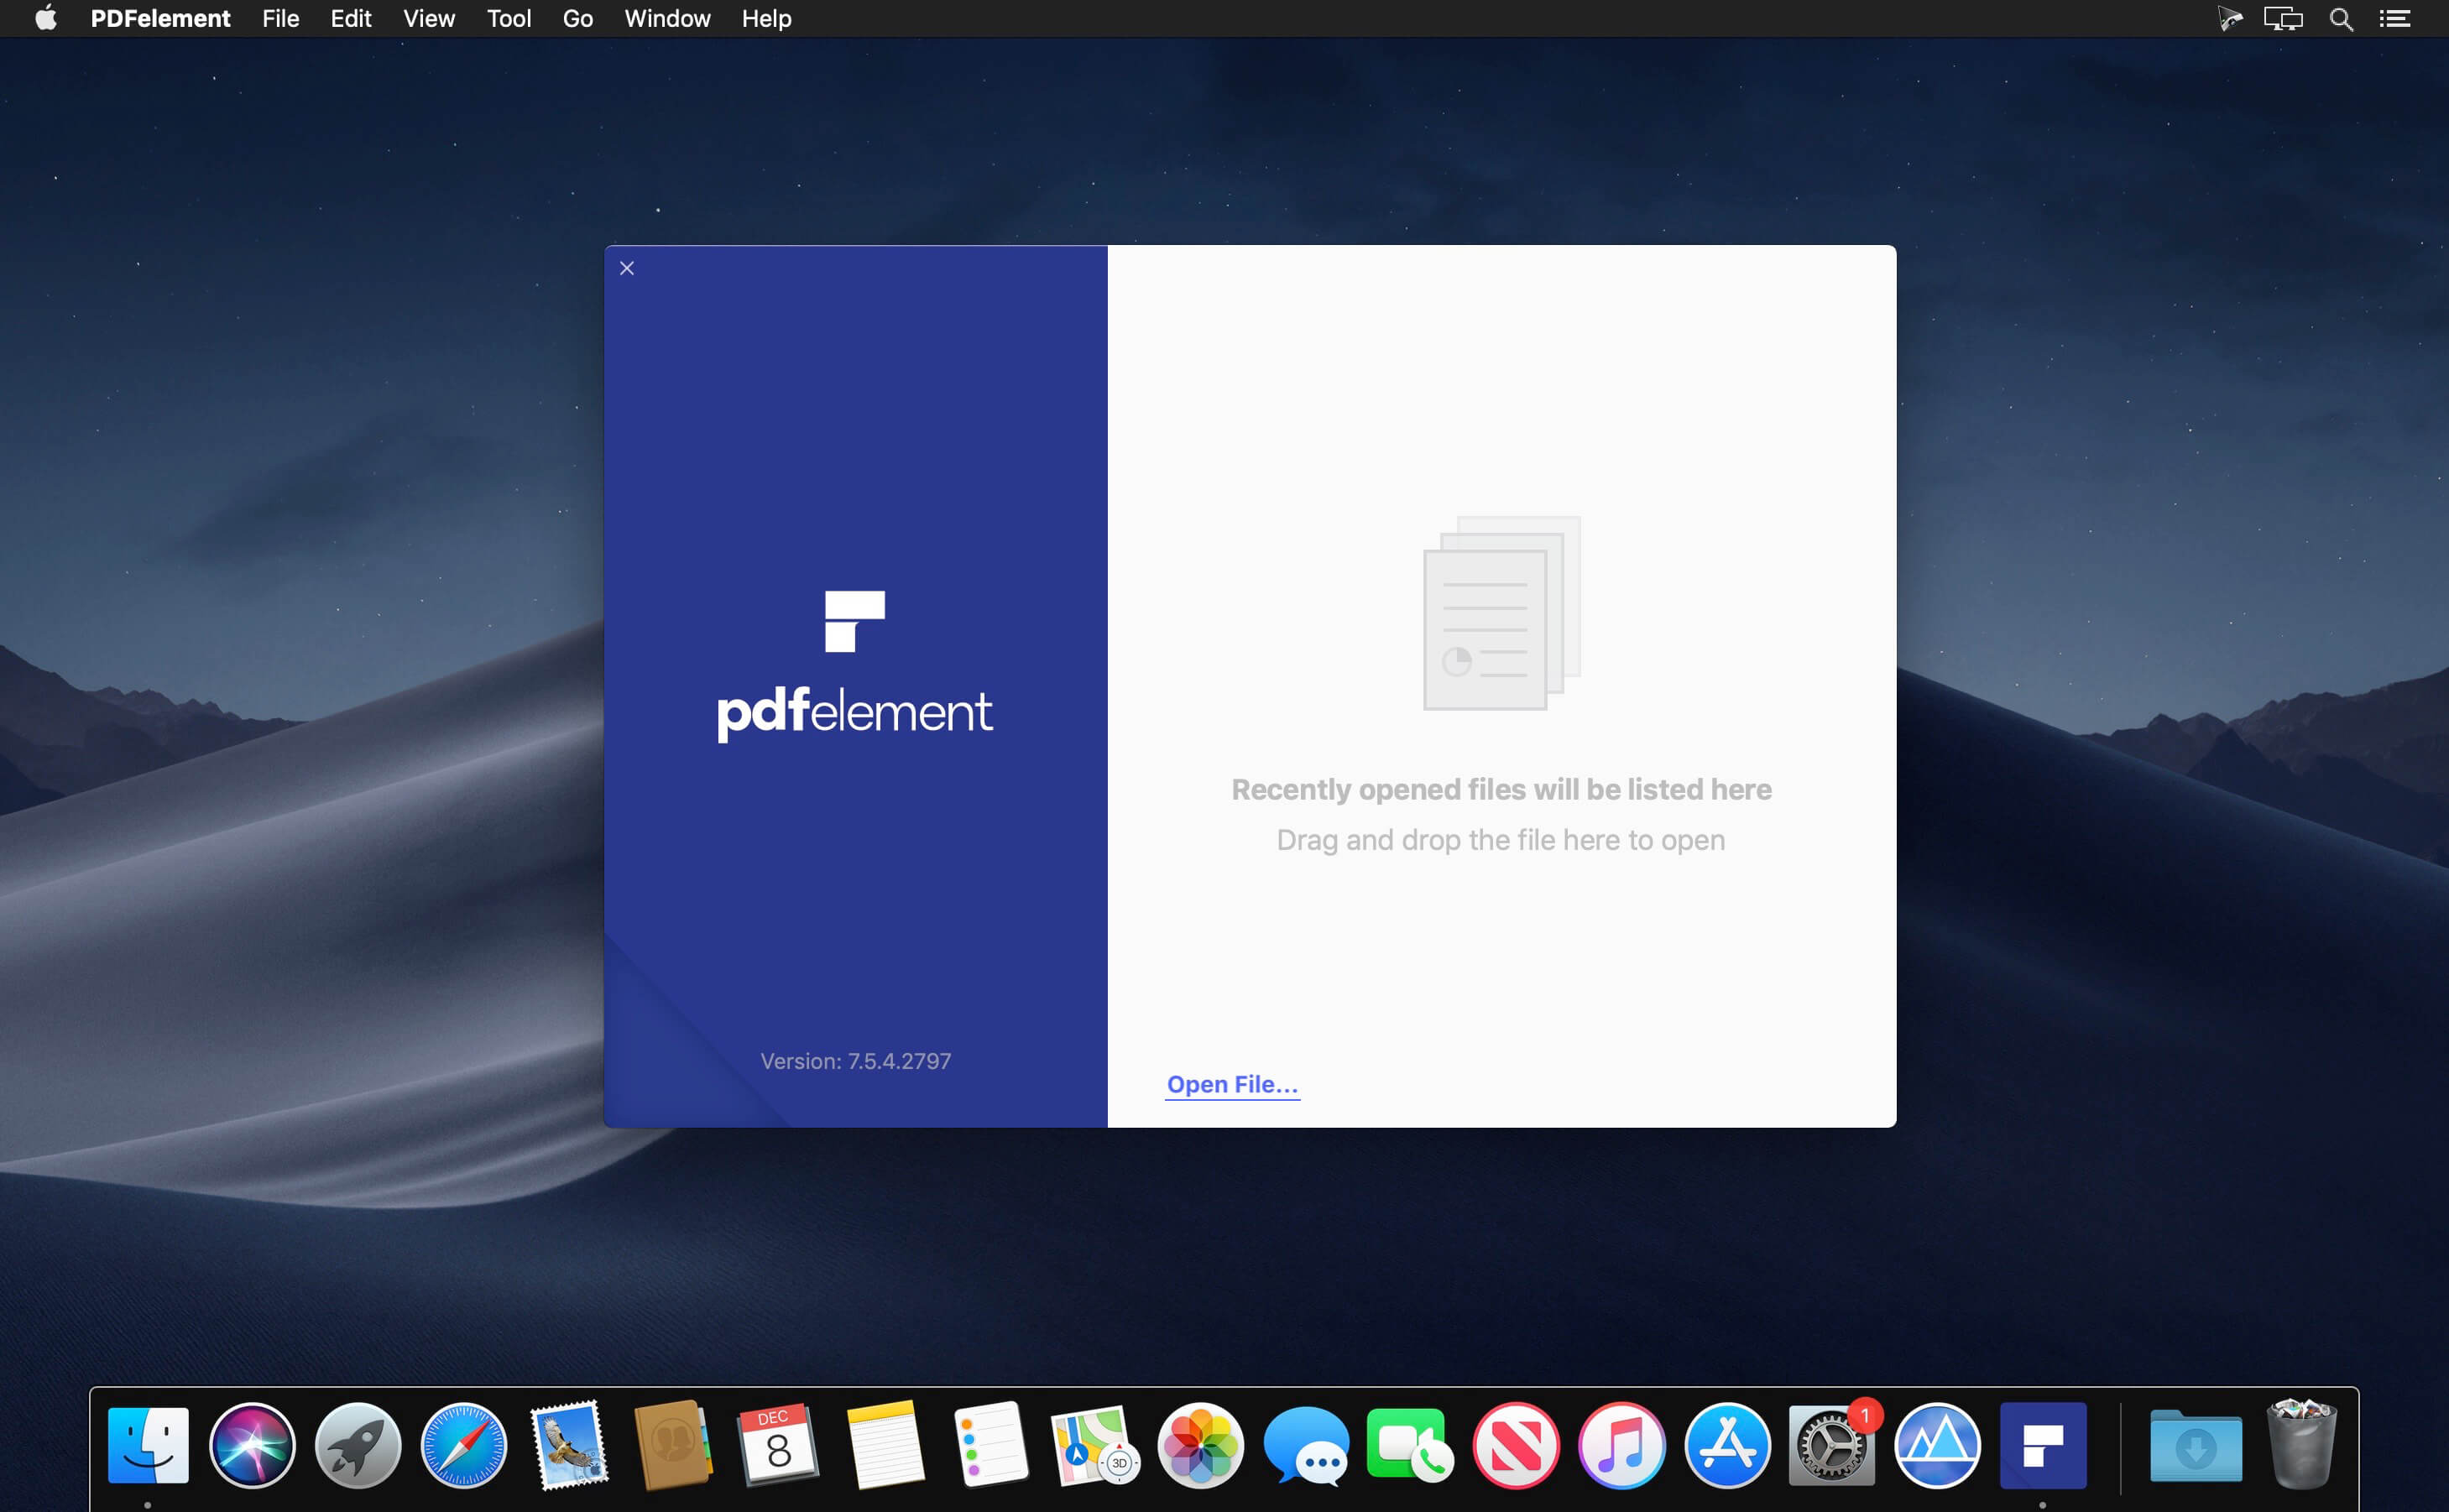 Wondershare PDFelement Pro 10.0.7.2464 download the new version